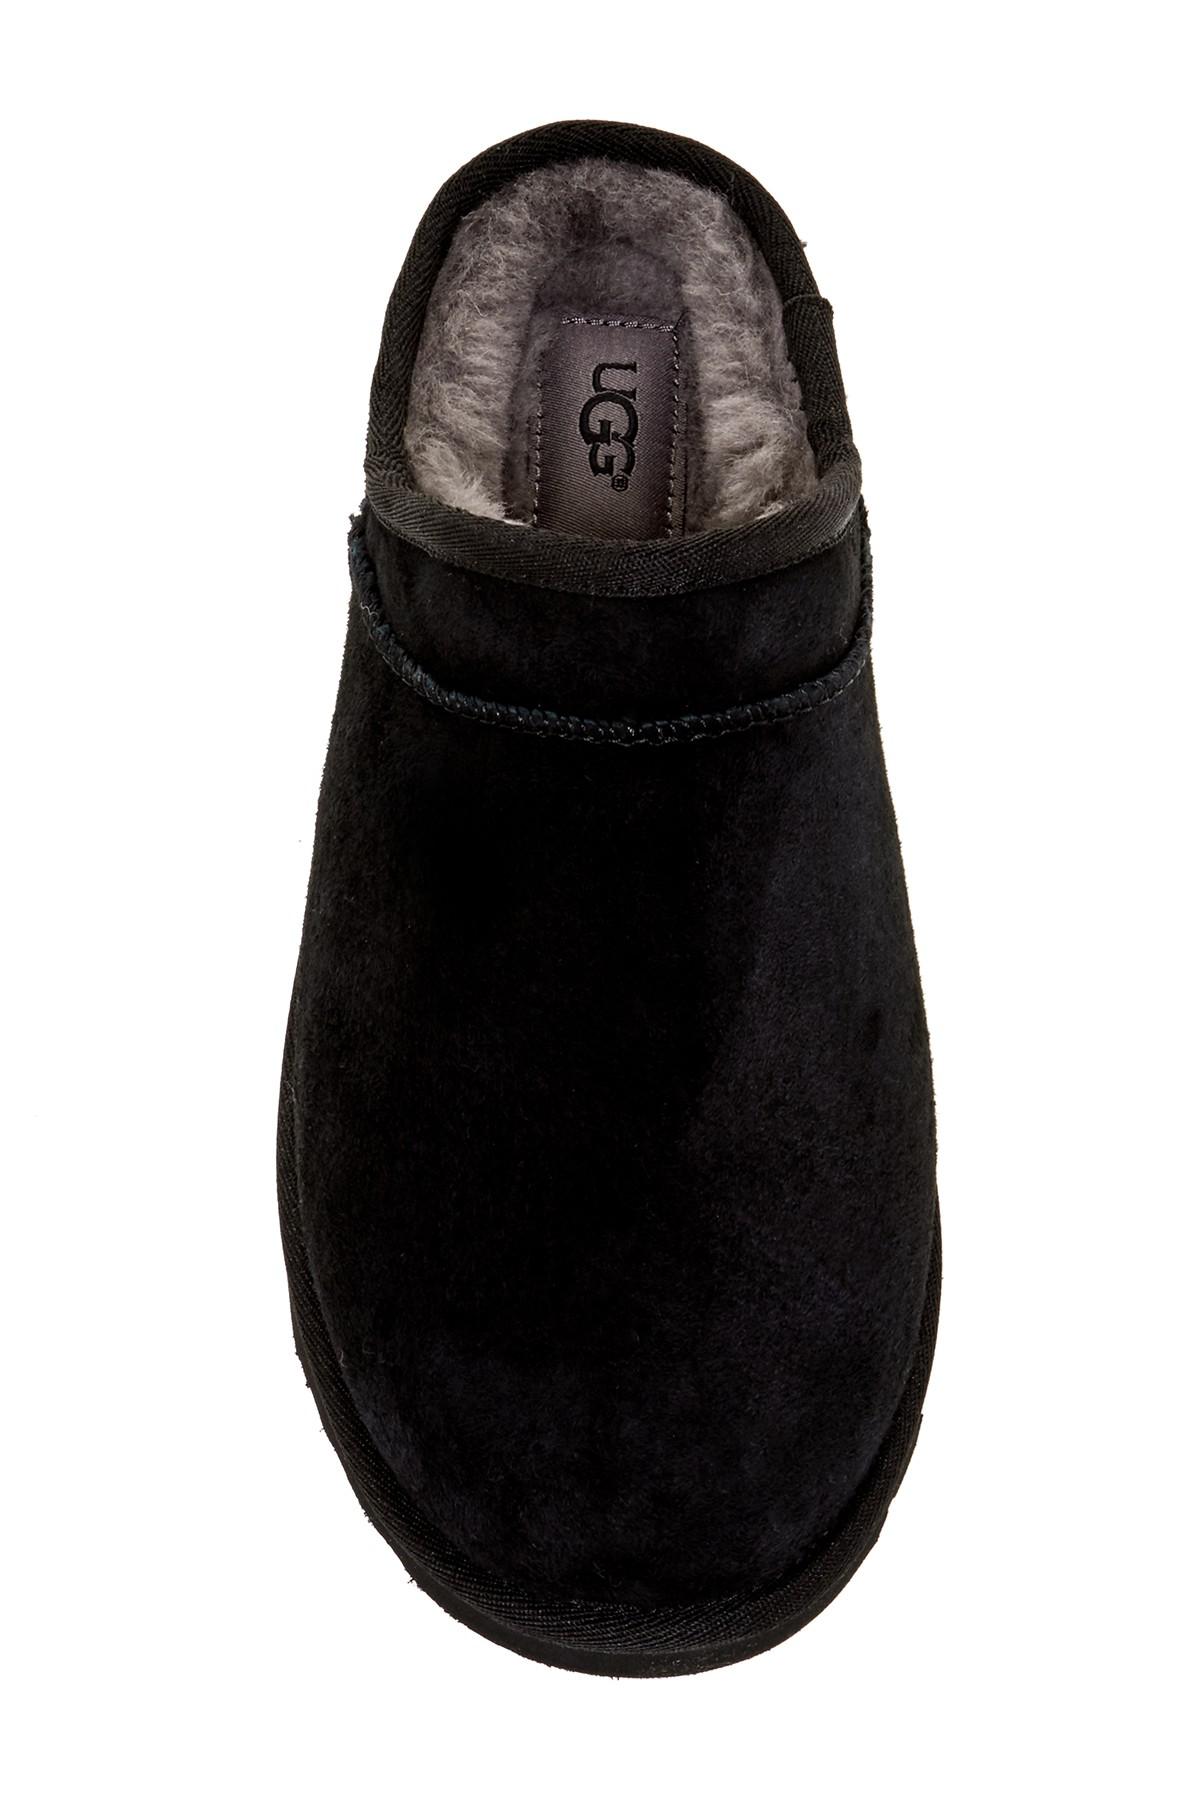 UGG Wool Classic Water Resistant Slipper in Black - Lyst